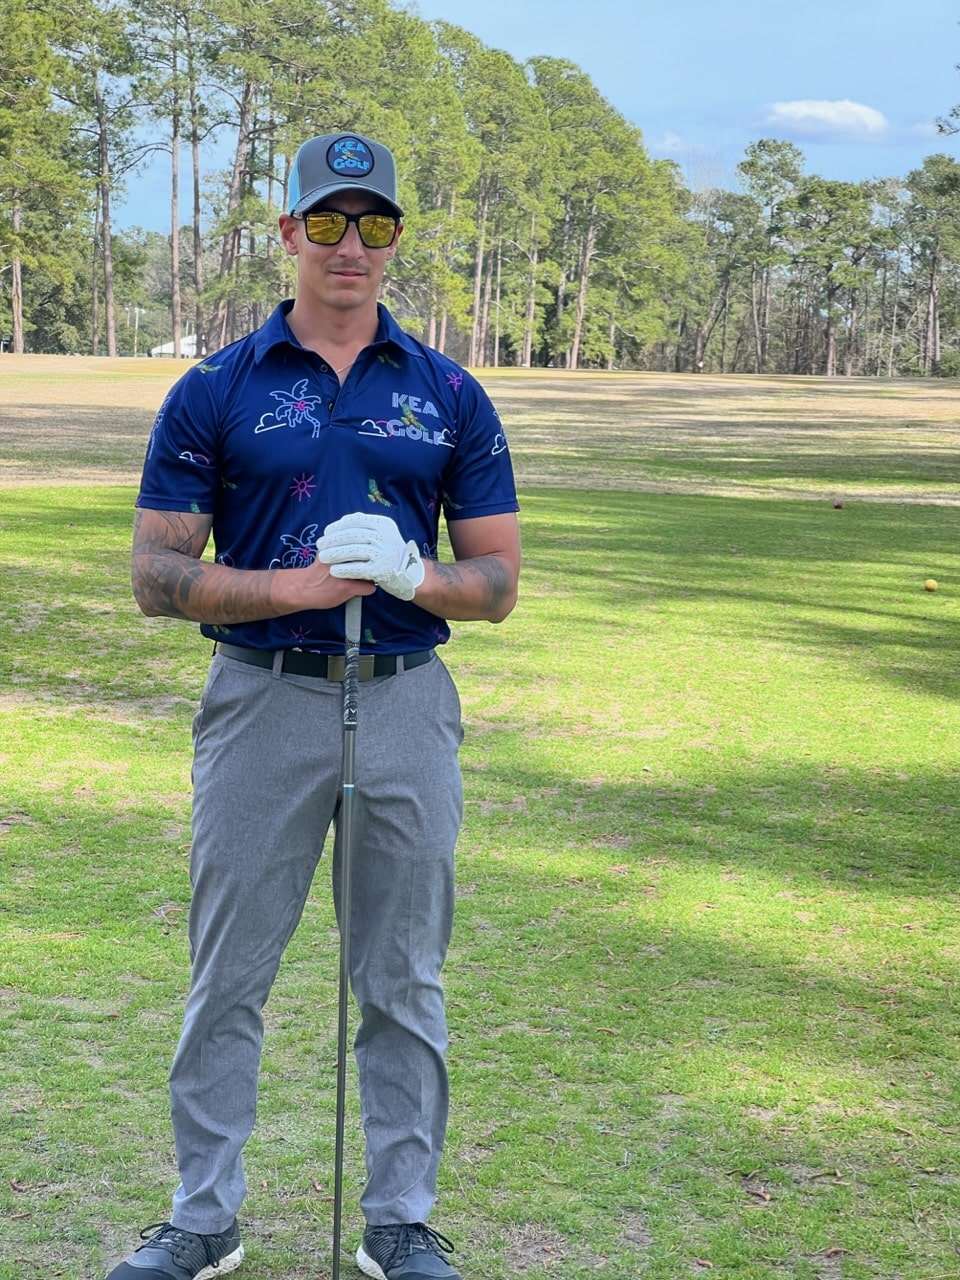 KEA Golf Men's Golf Hat "Blue Horizon" trucker style golf hat with mesh backing